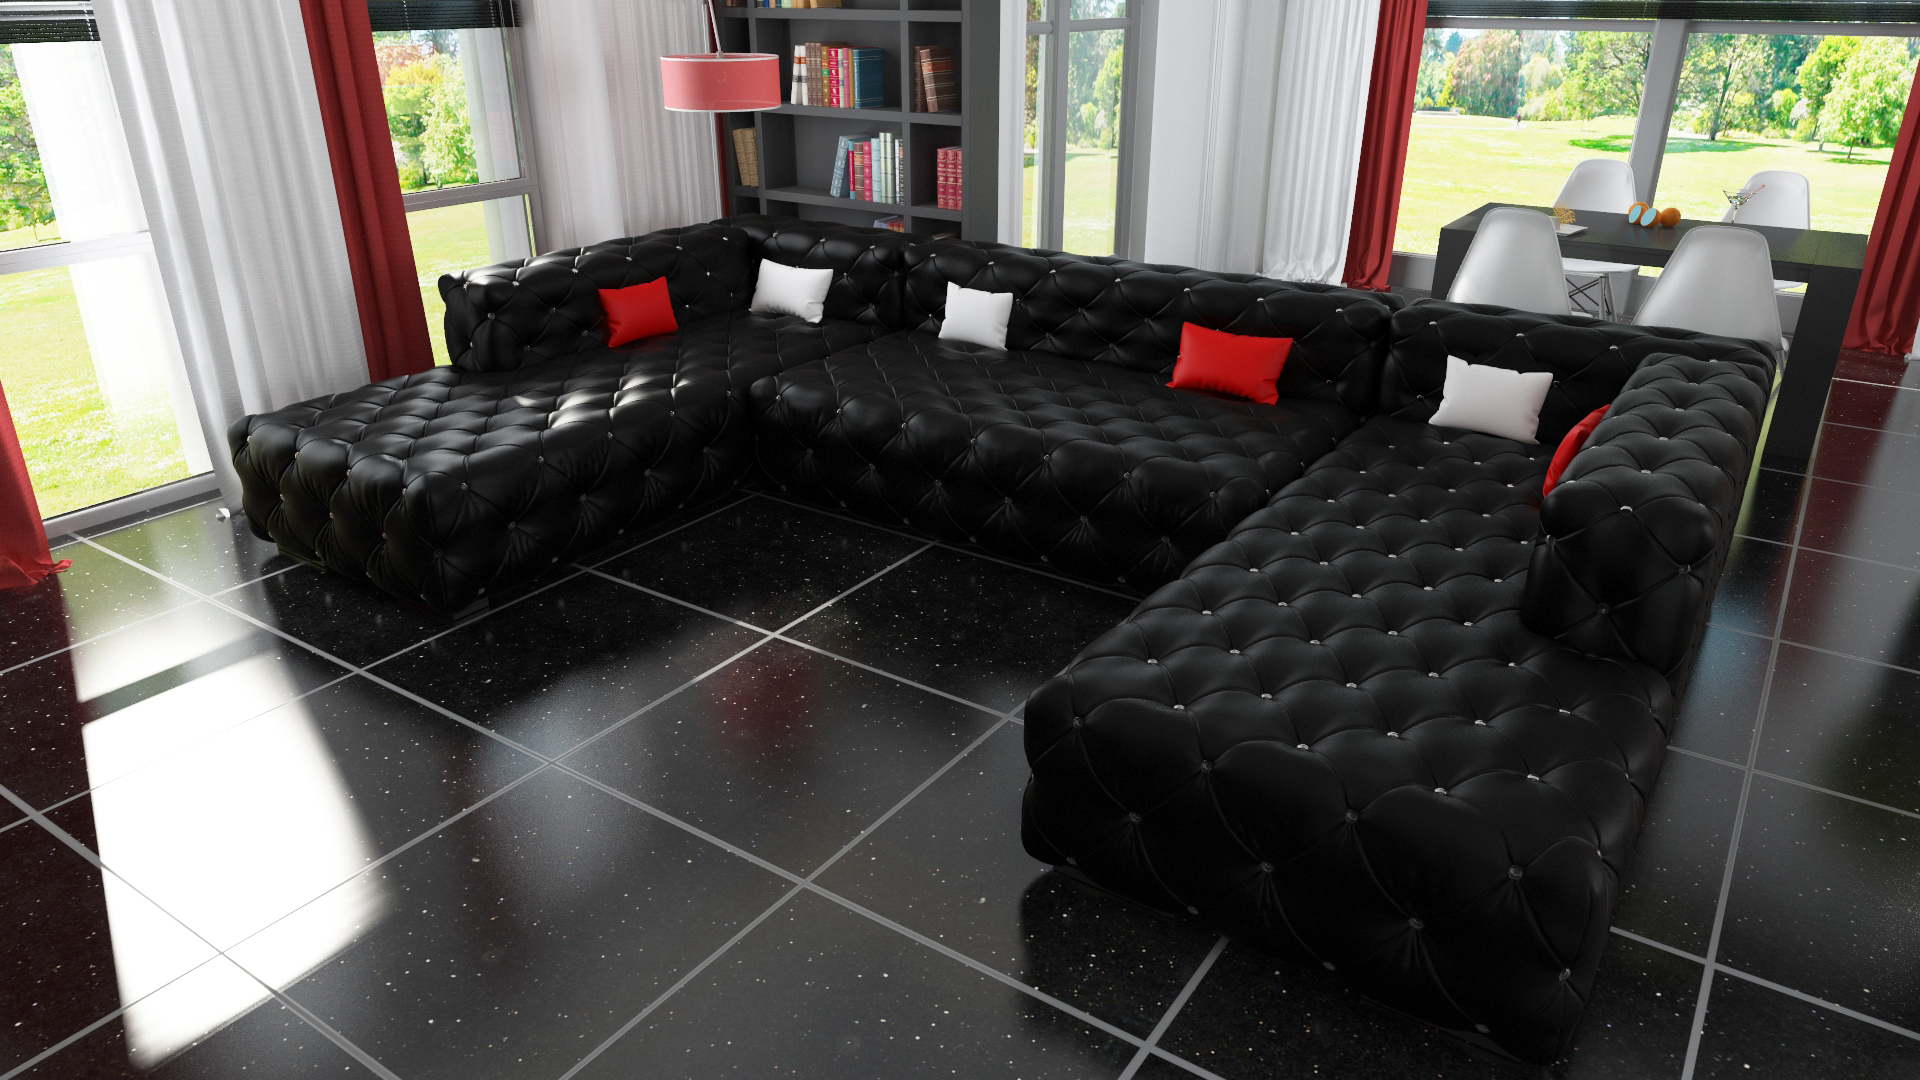 Details About Designer Chesterfield Xxl Wohnlandschaft Kristalle Textil Leder Sofa Couch Neu A